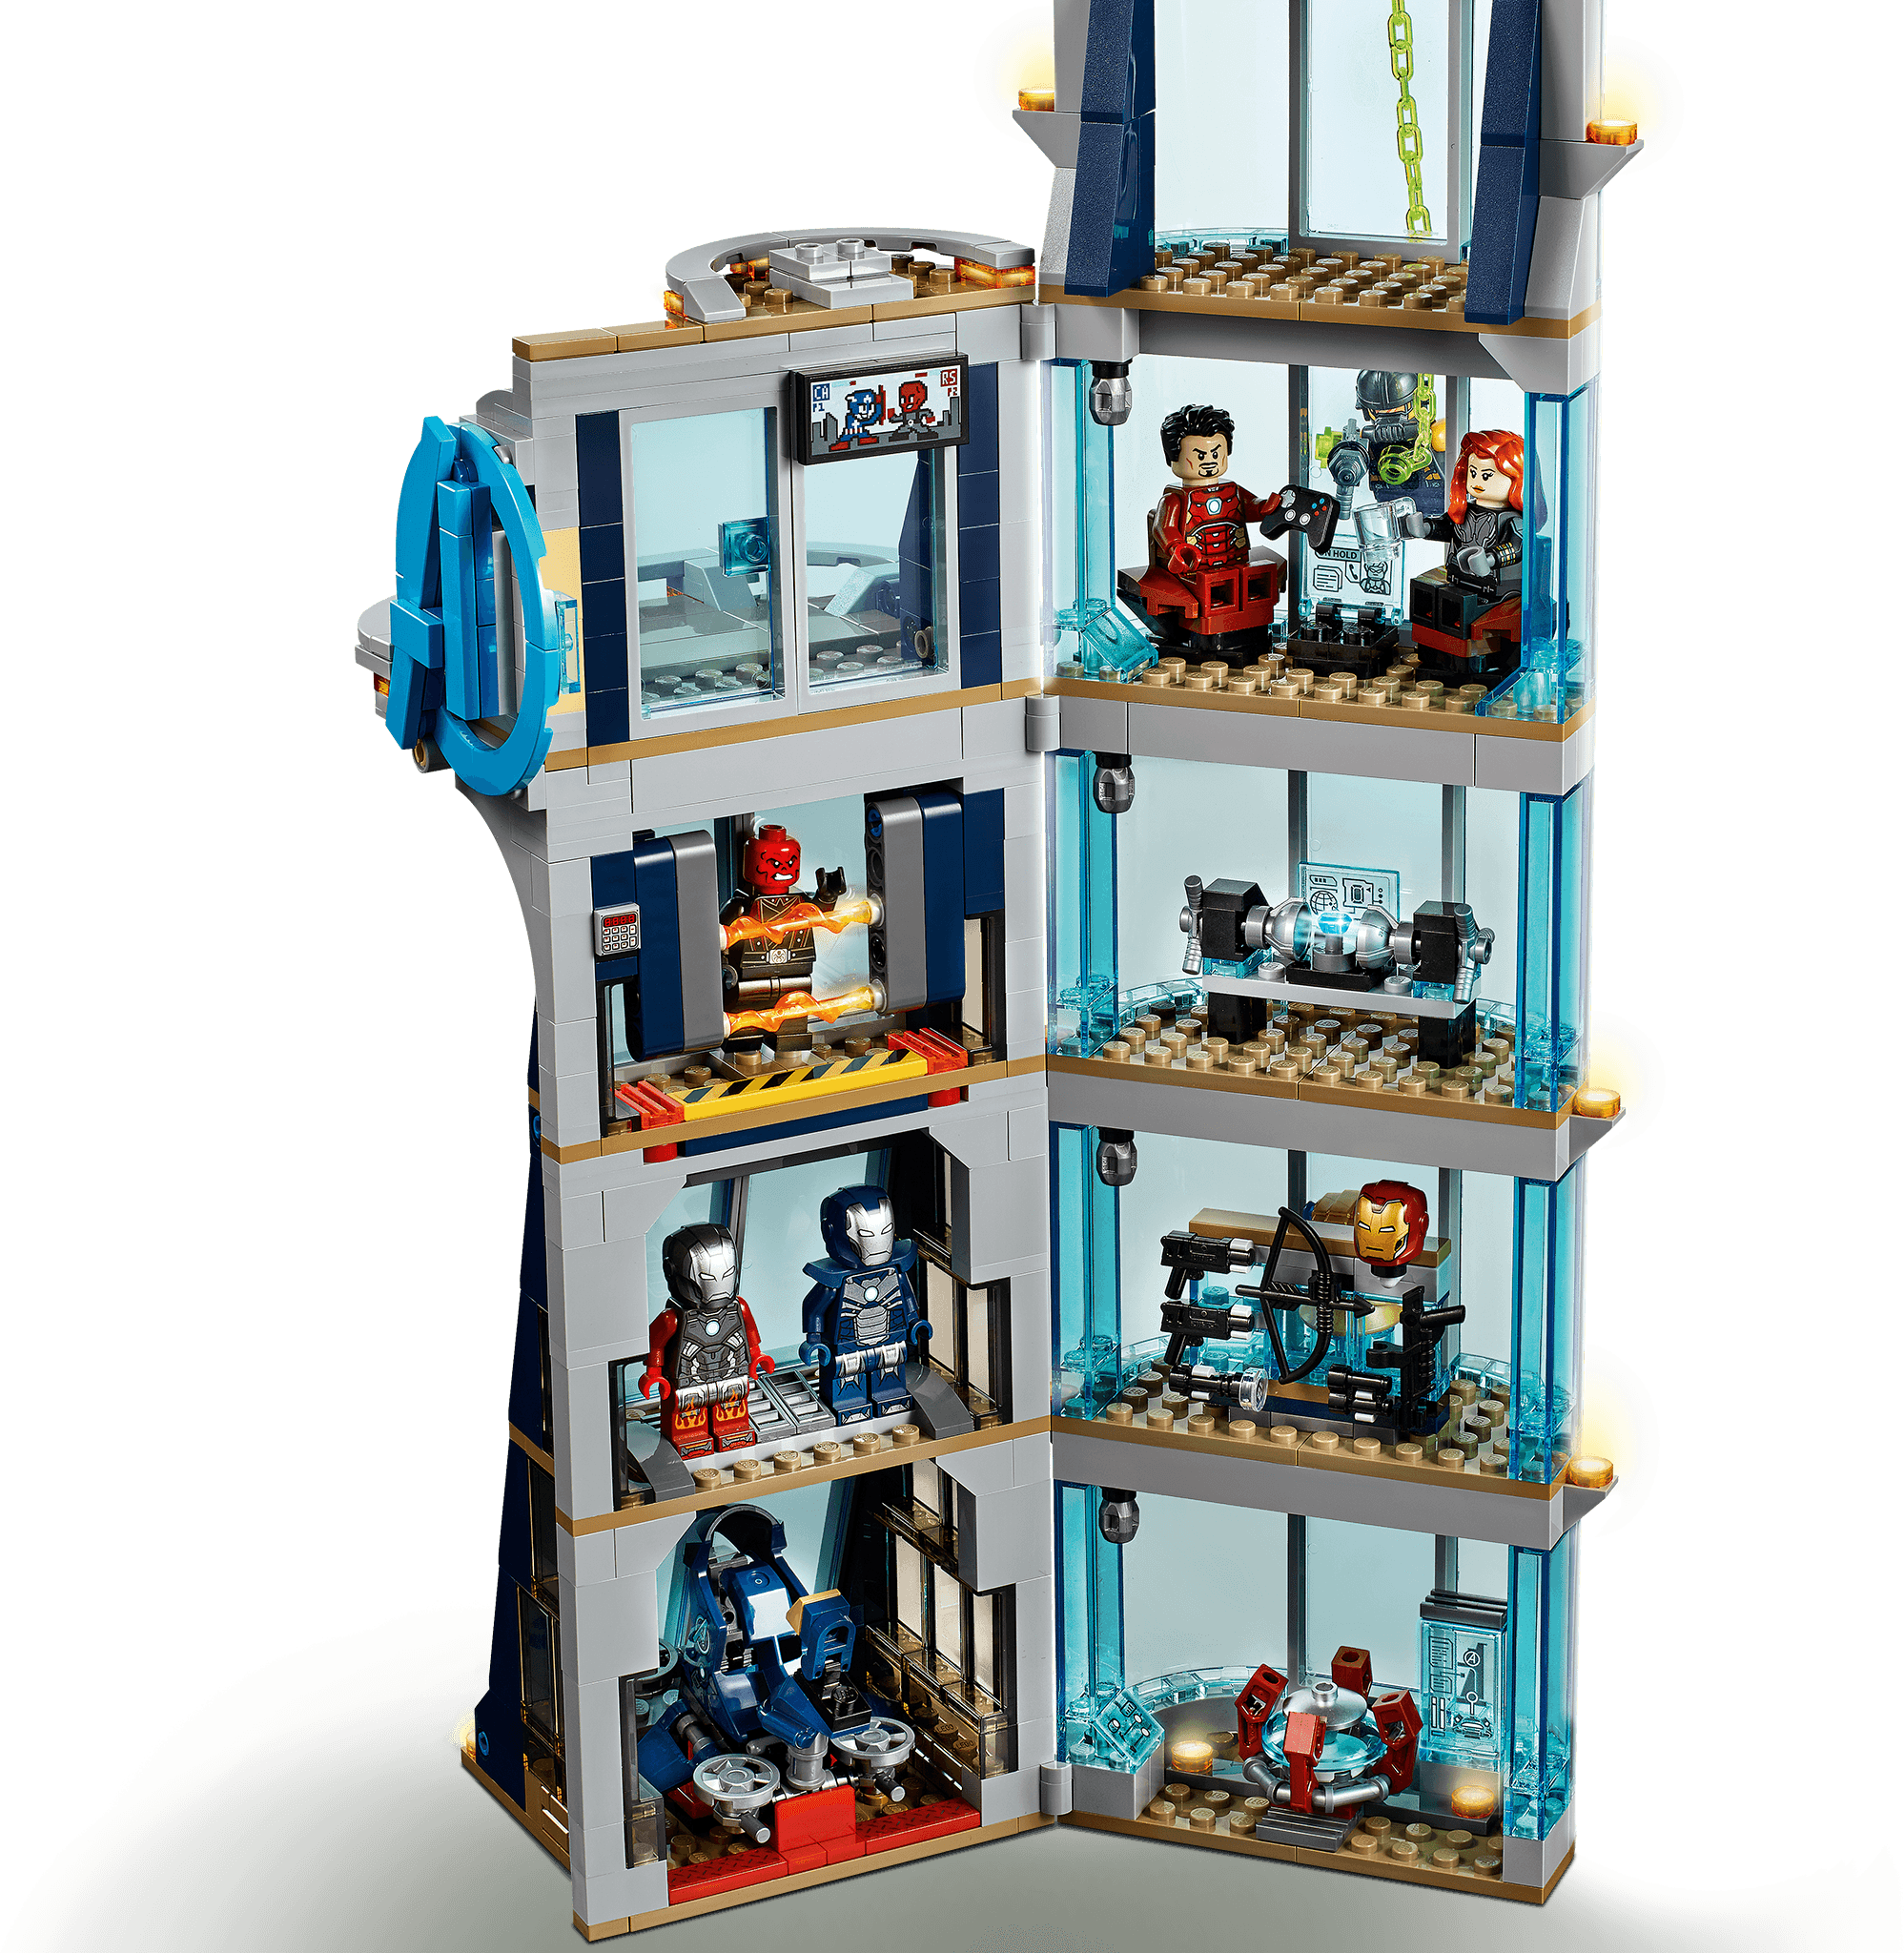 Avengers Tower Battle 76166 Marvel | Buy online at the LEGO® Shop US